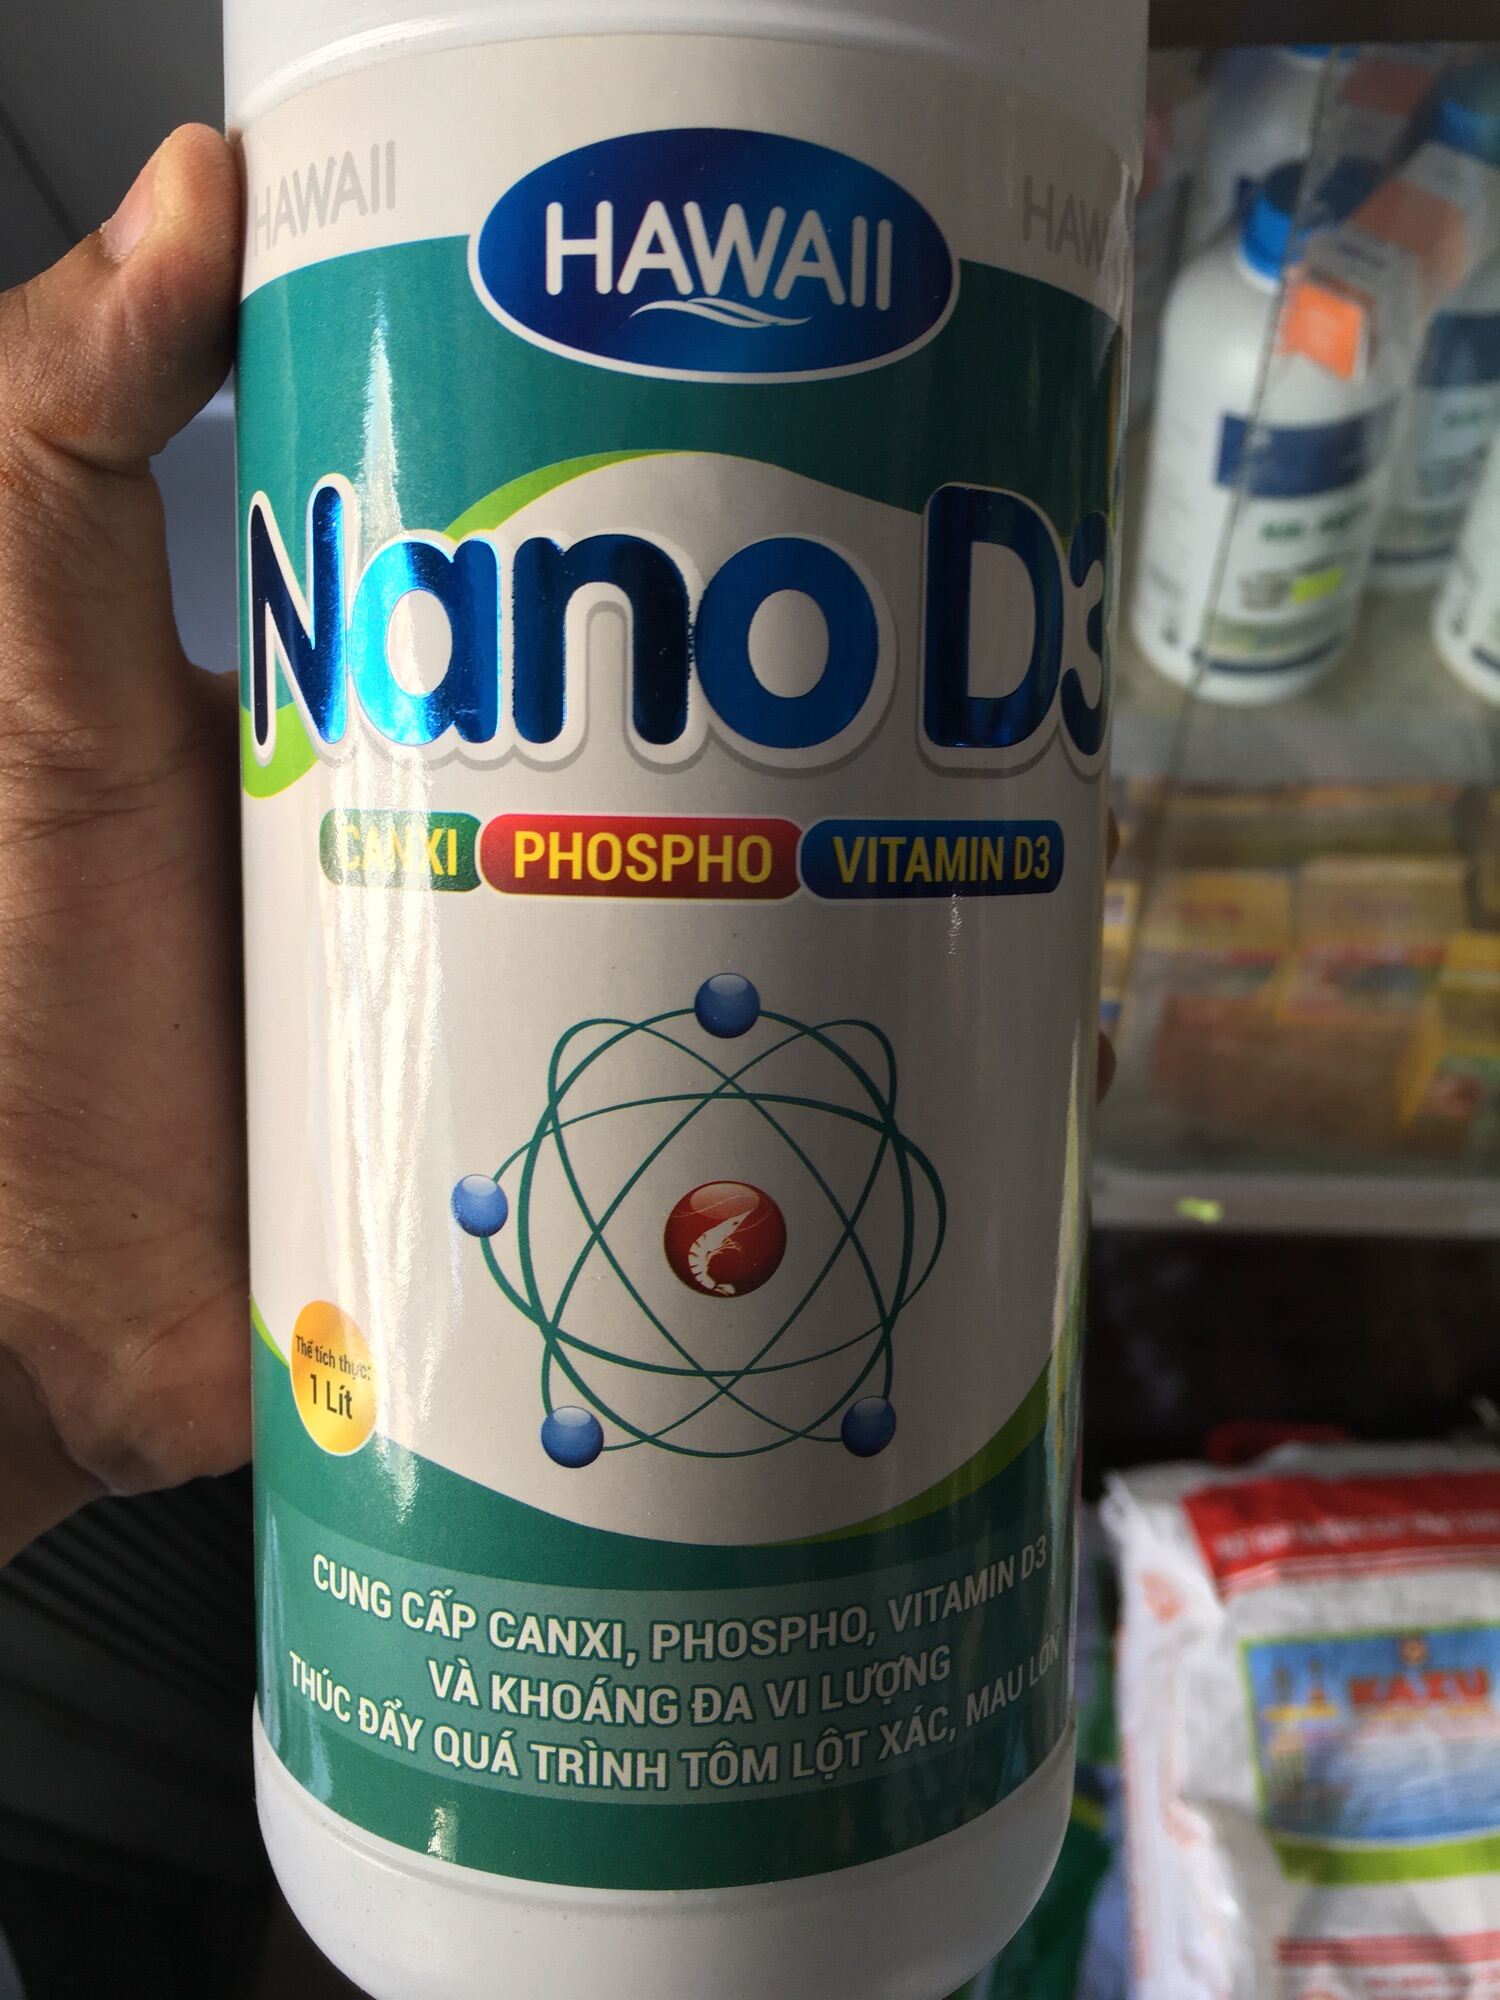 Nano D3 hawall cung cấp can xi , vitamin d3 , phot pho